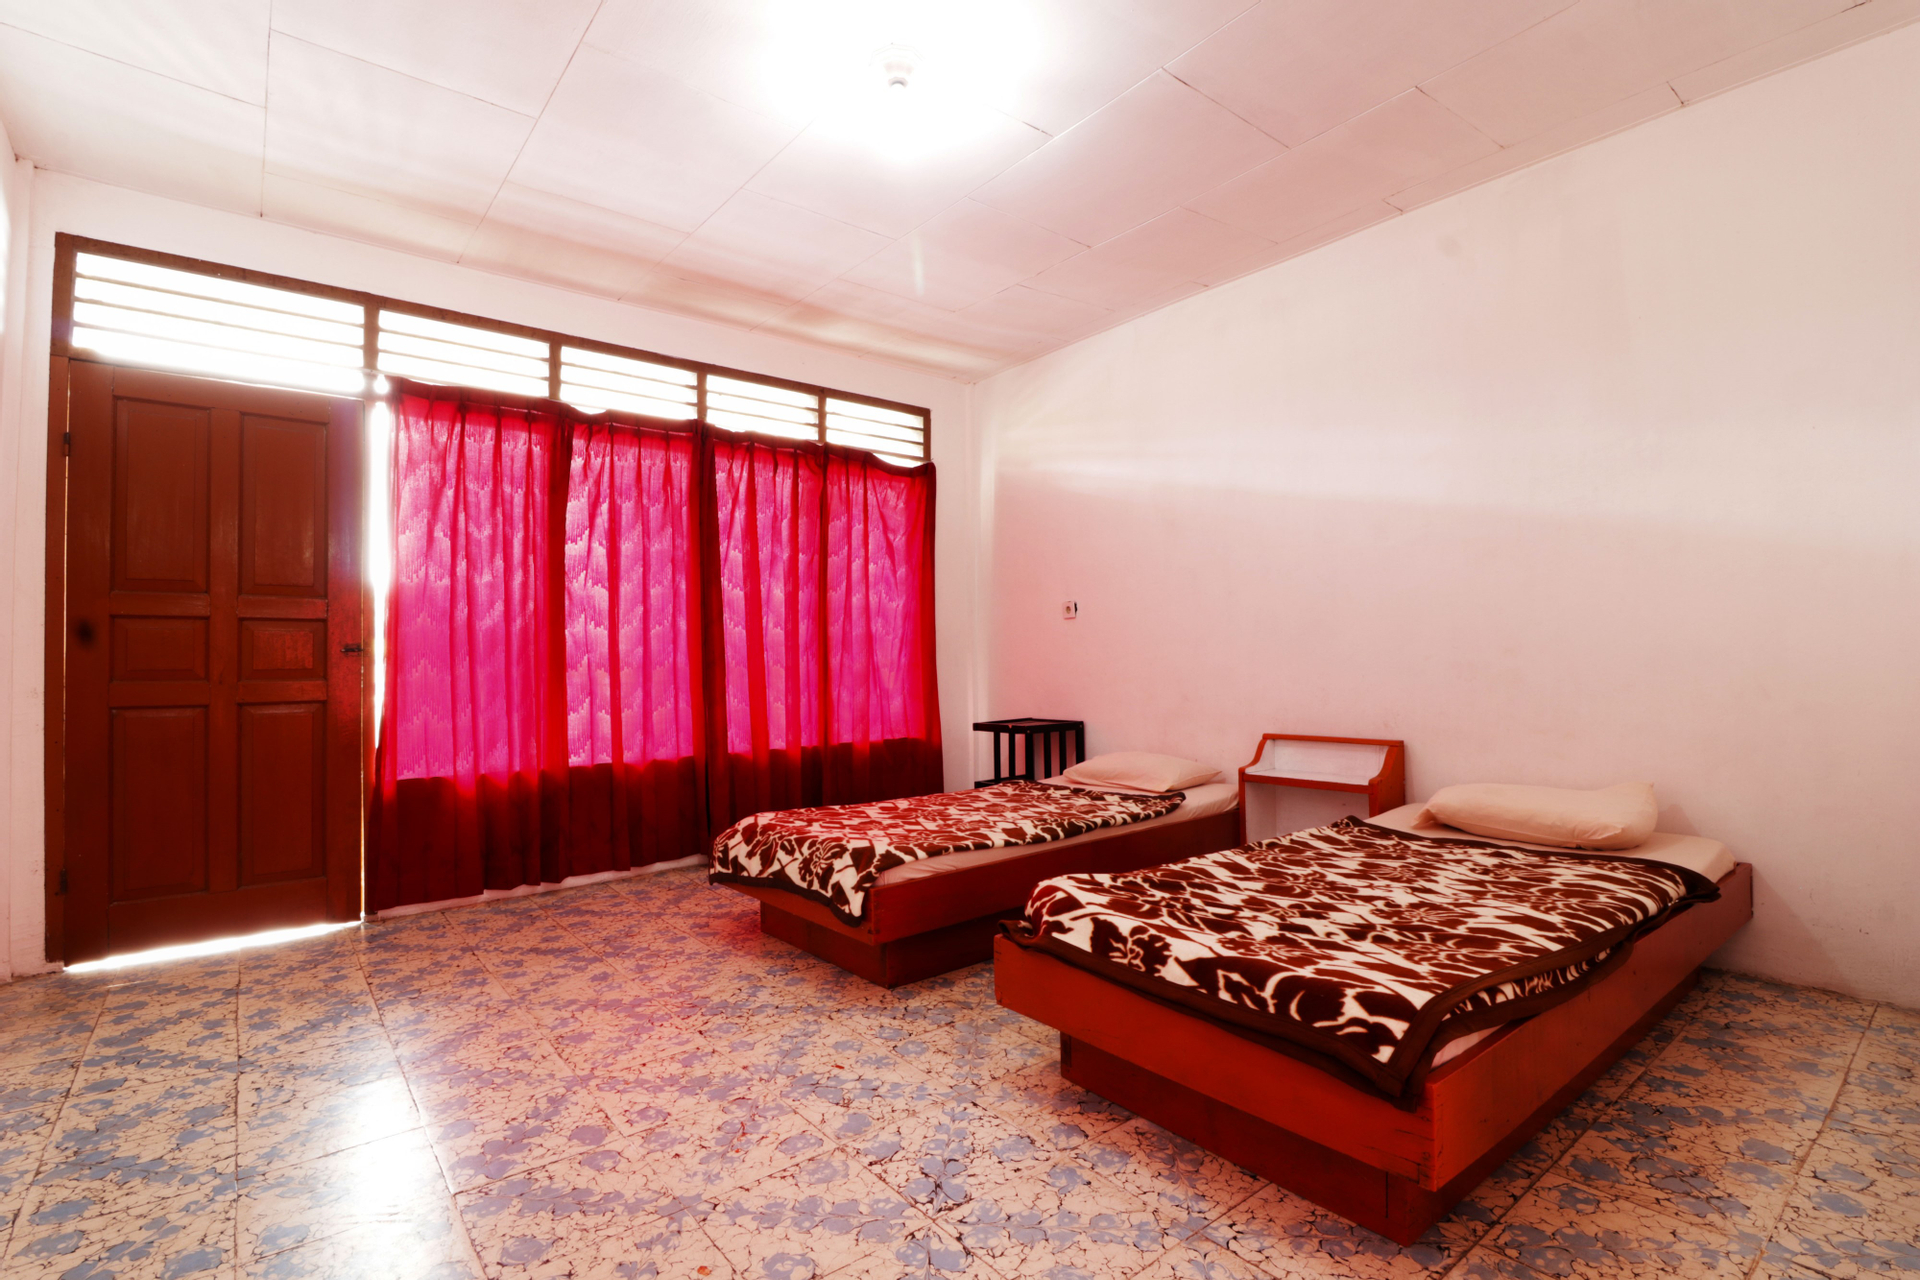 Bedroom 2, Hotel Sumber Pulo Mas, Samosir